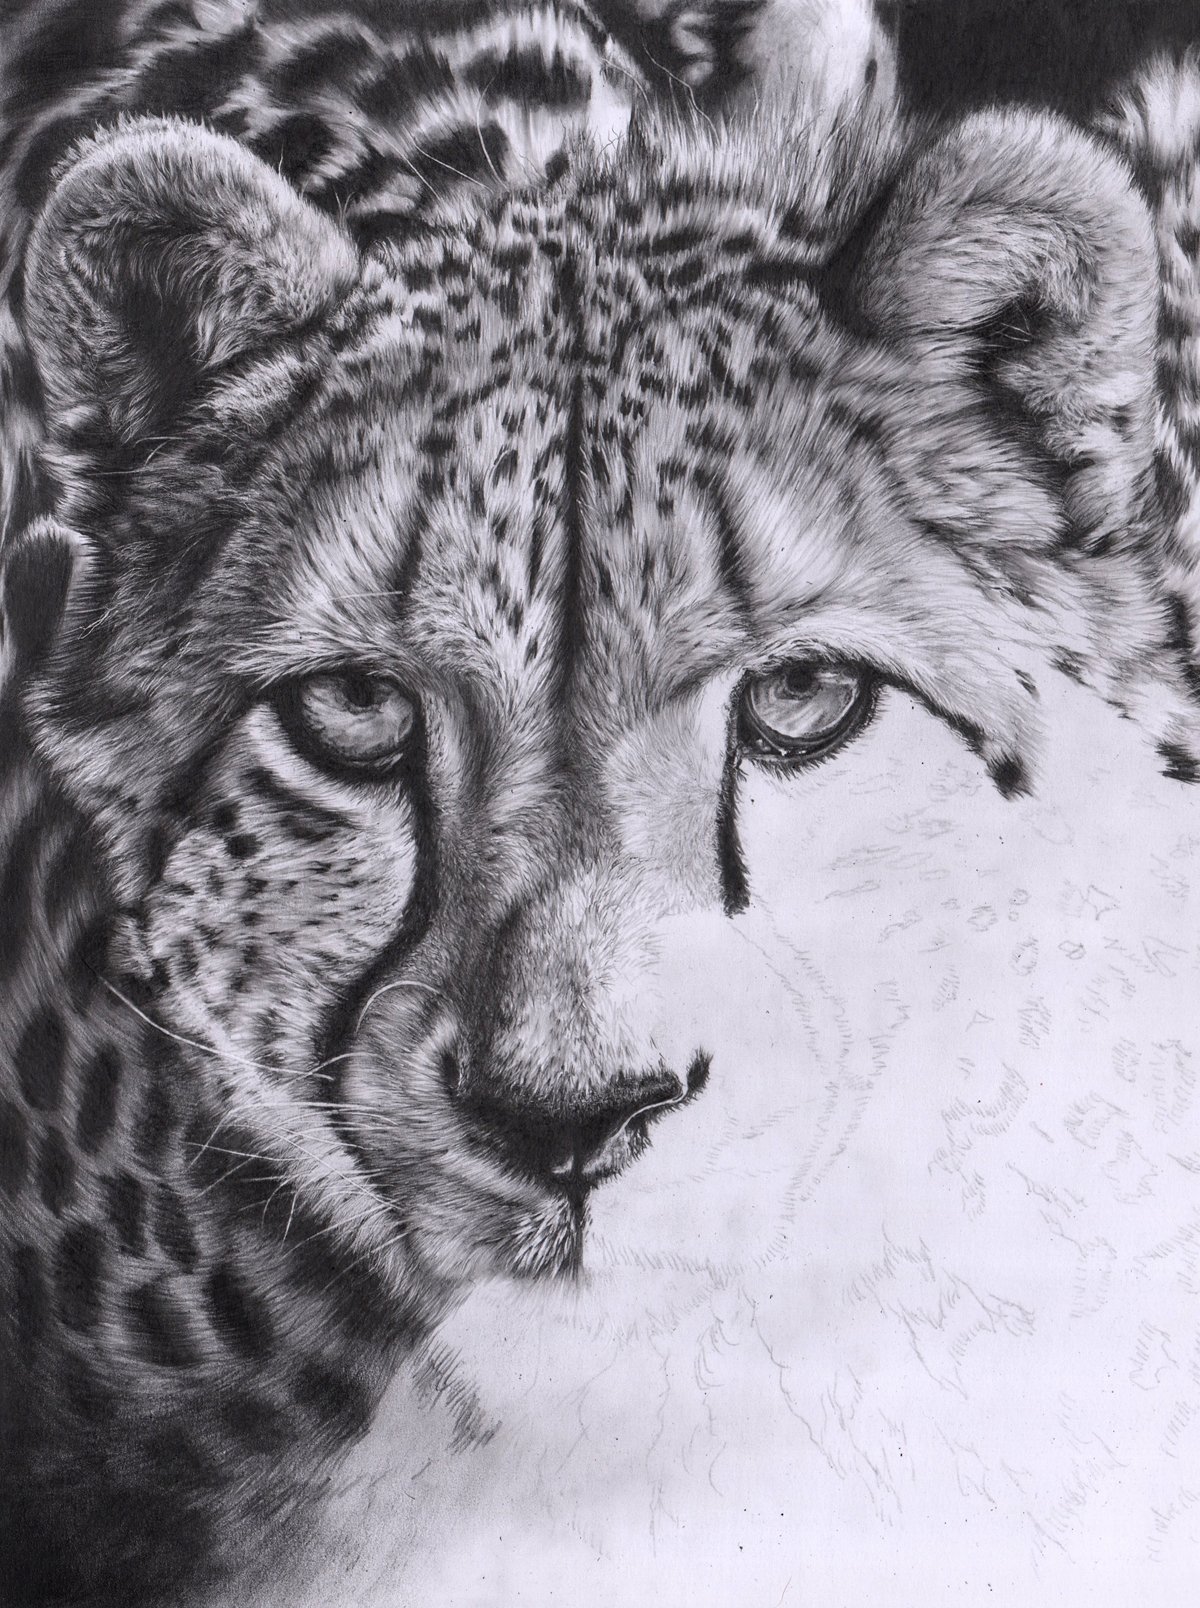 Buy Cheetah Face Original Ink Drawing Online in India - Etsy